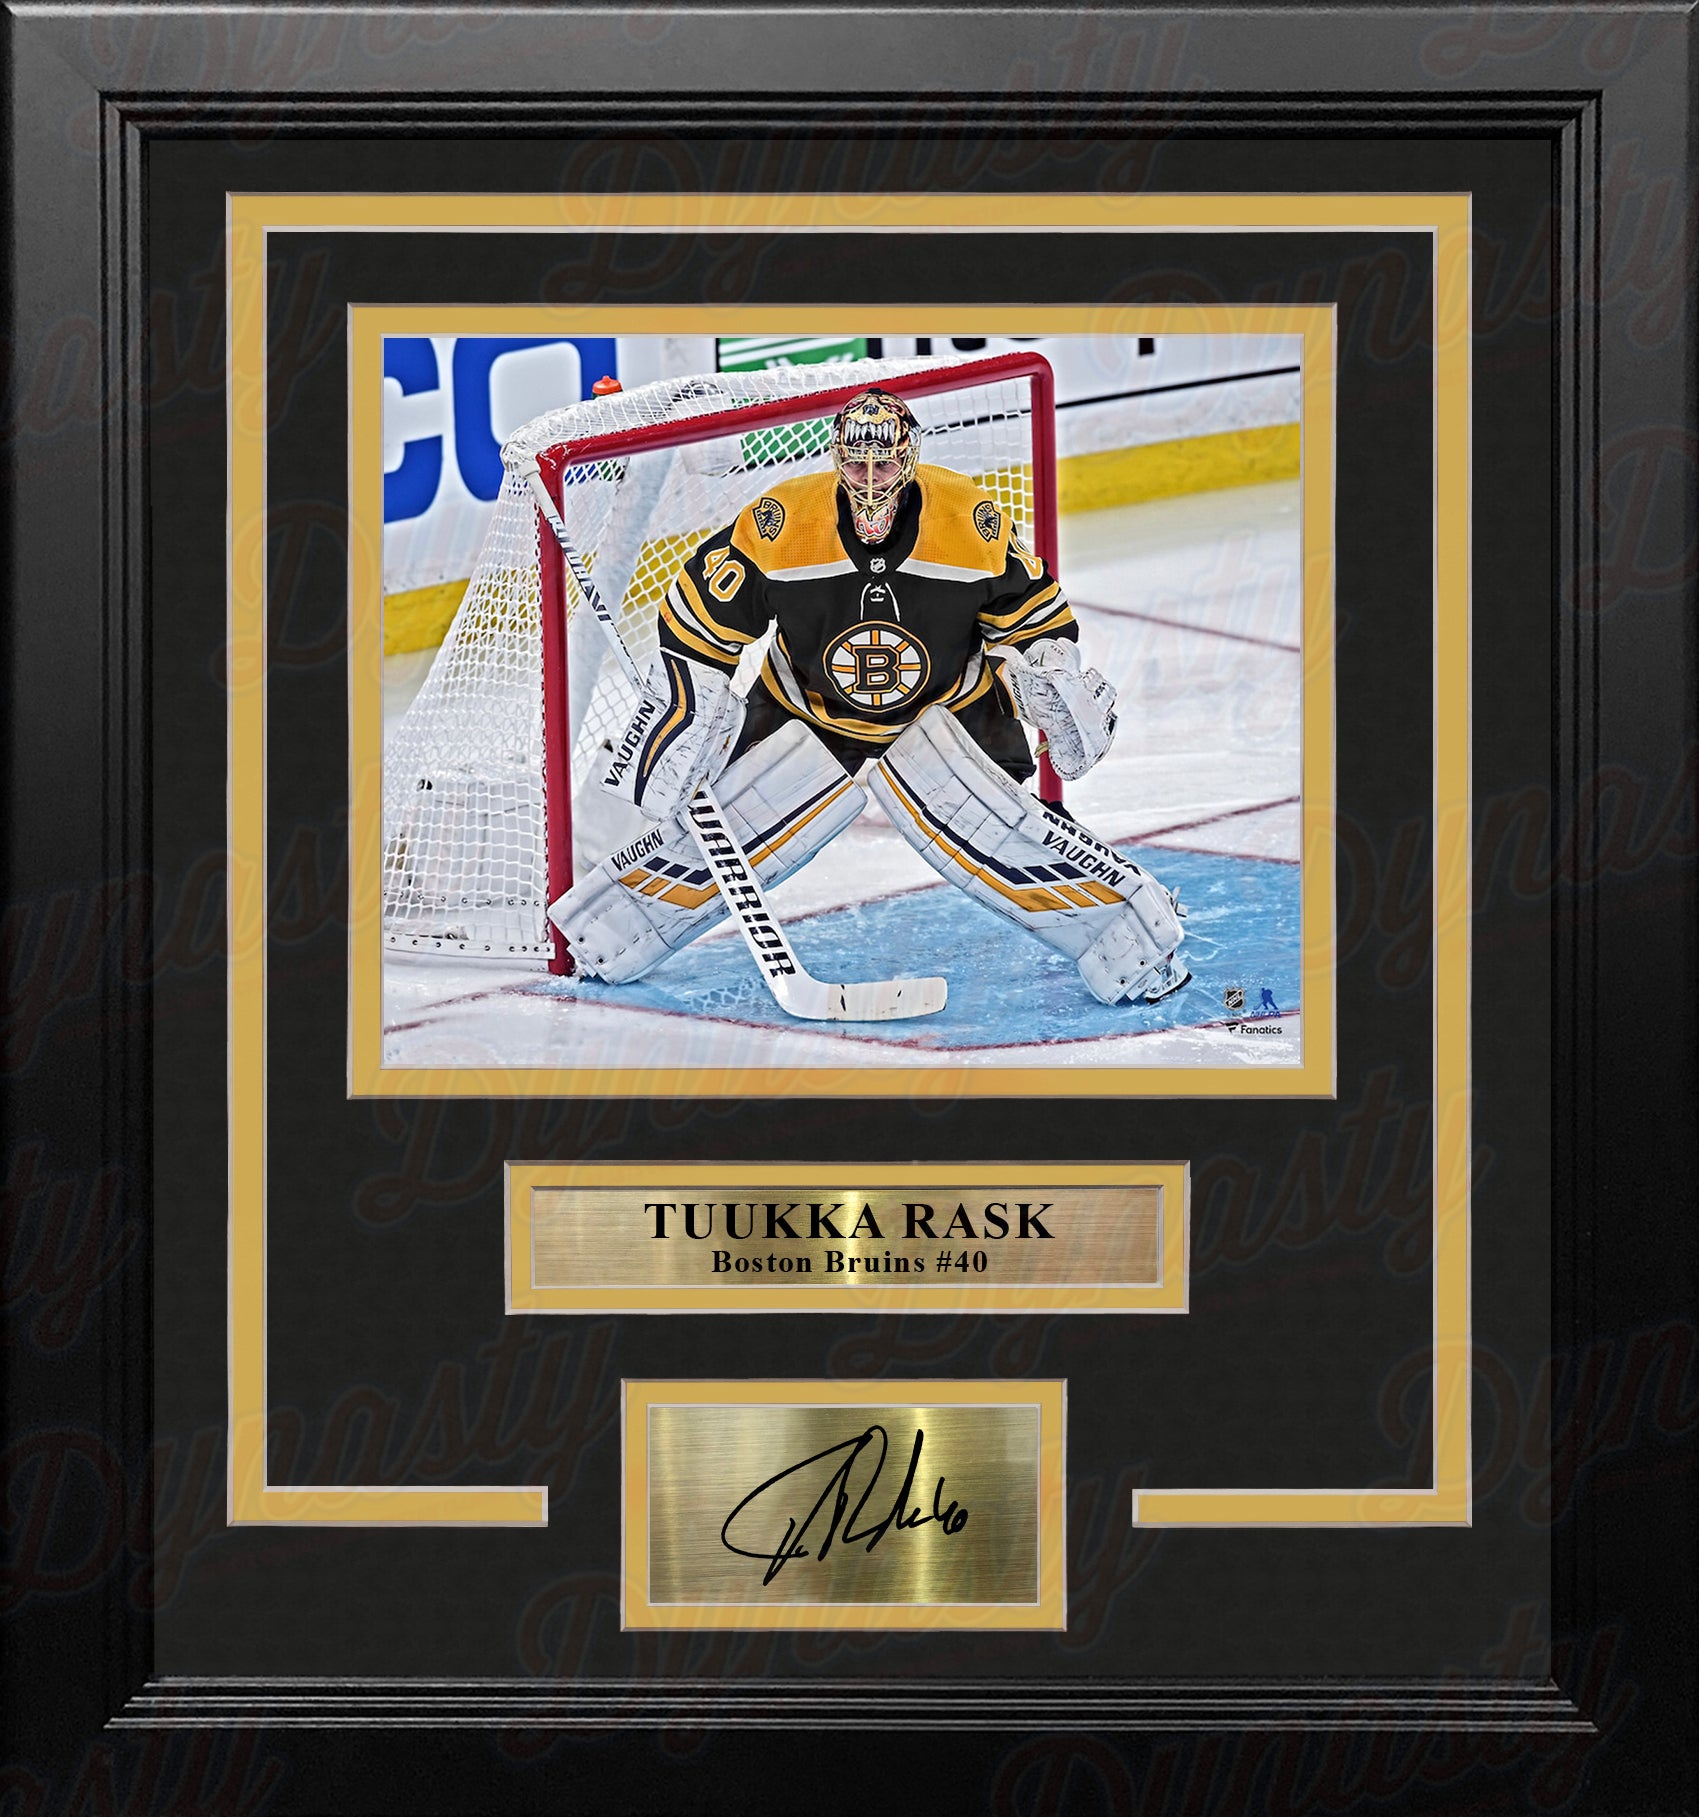 Tuukka Rask in Action Boston Bruins 8" x 10" Framed Hockey Photo with Engraved Autograph - Dynasty Sports & Framing 